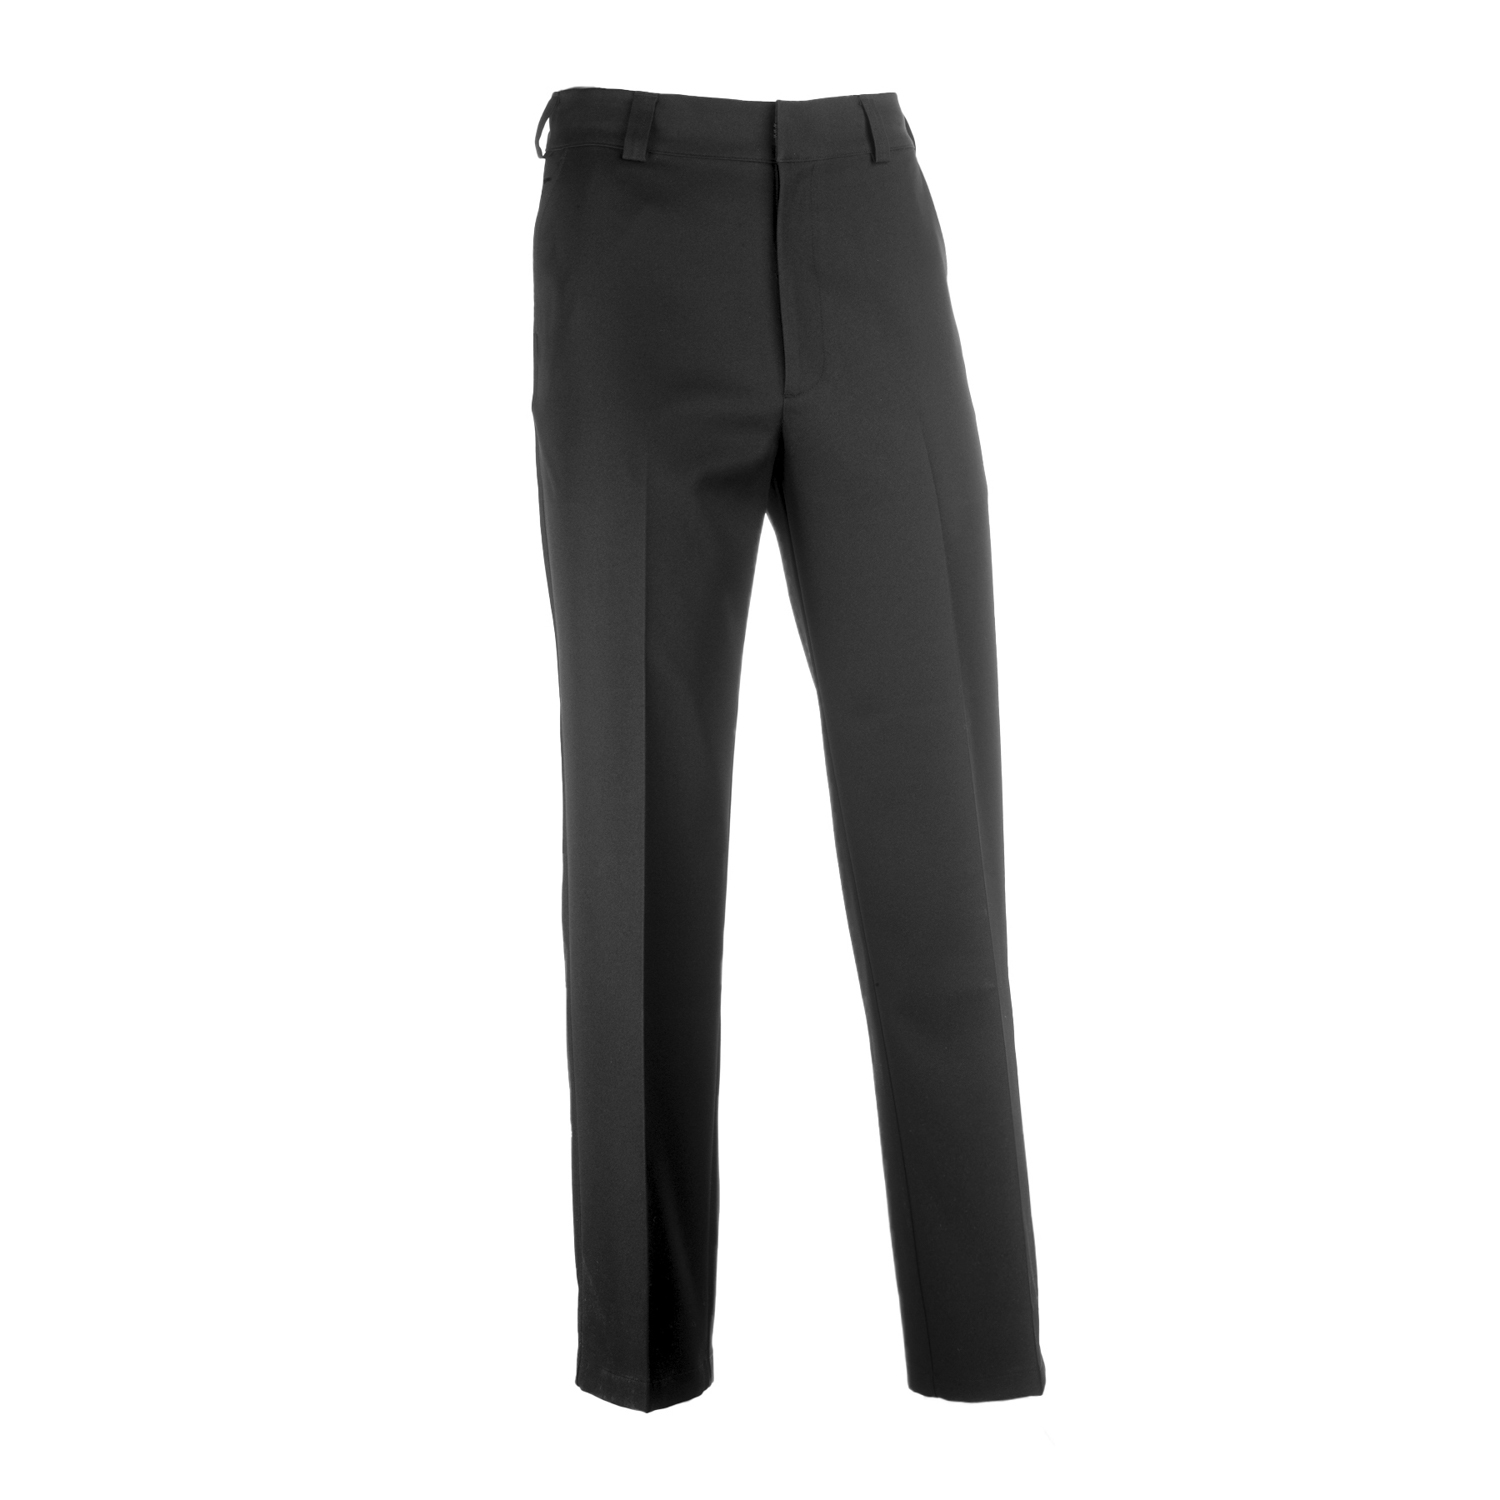 NEW Lole Golf Waterproof Pants Womens Size 10 Grey Regular 698B